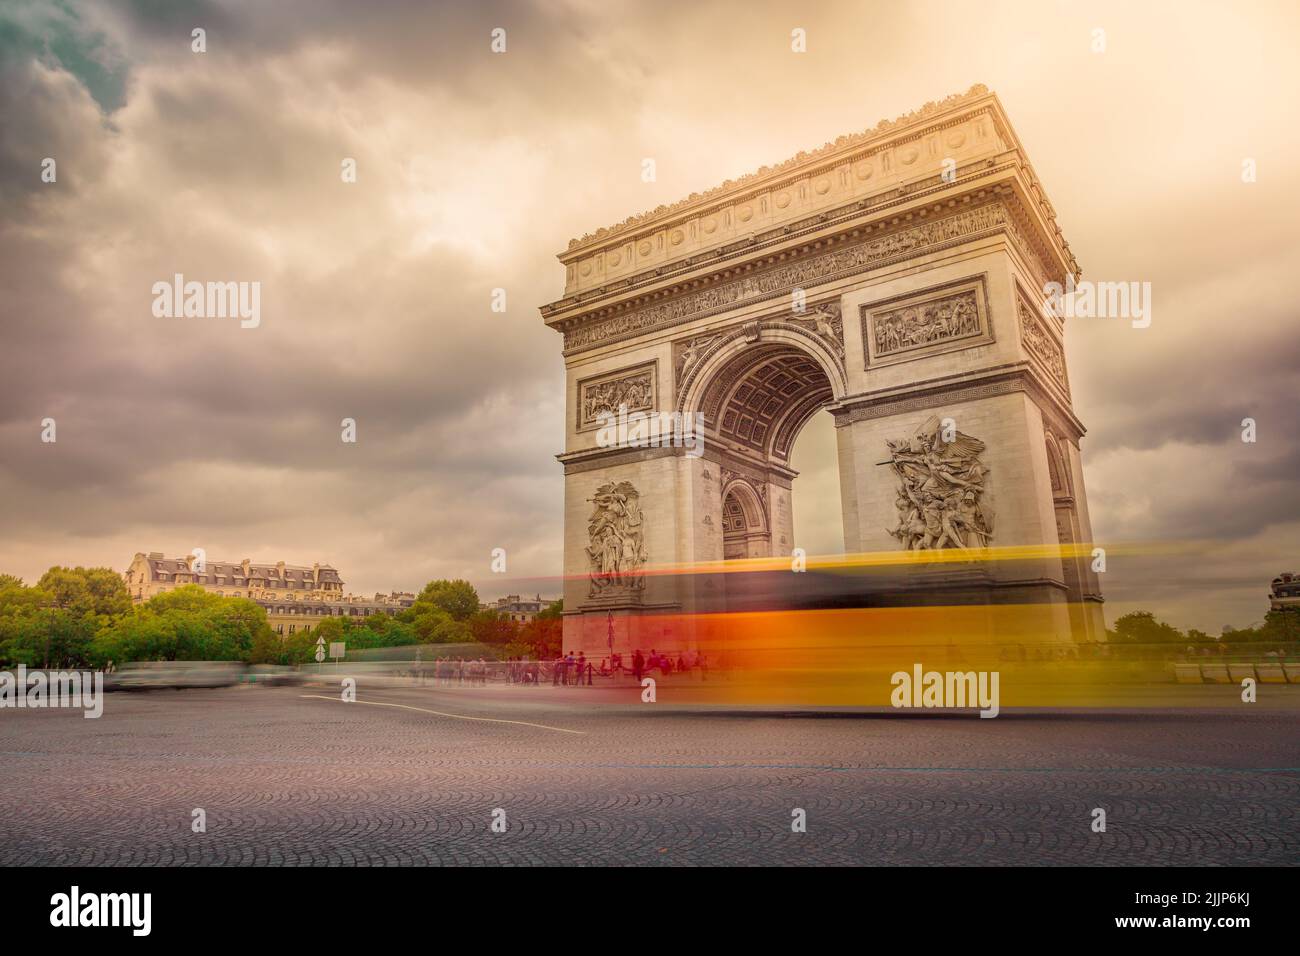 Arco trionfale in piazza Charles de Gaulle con auto sfocate, Parigi Foto Stock